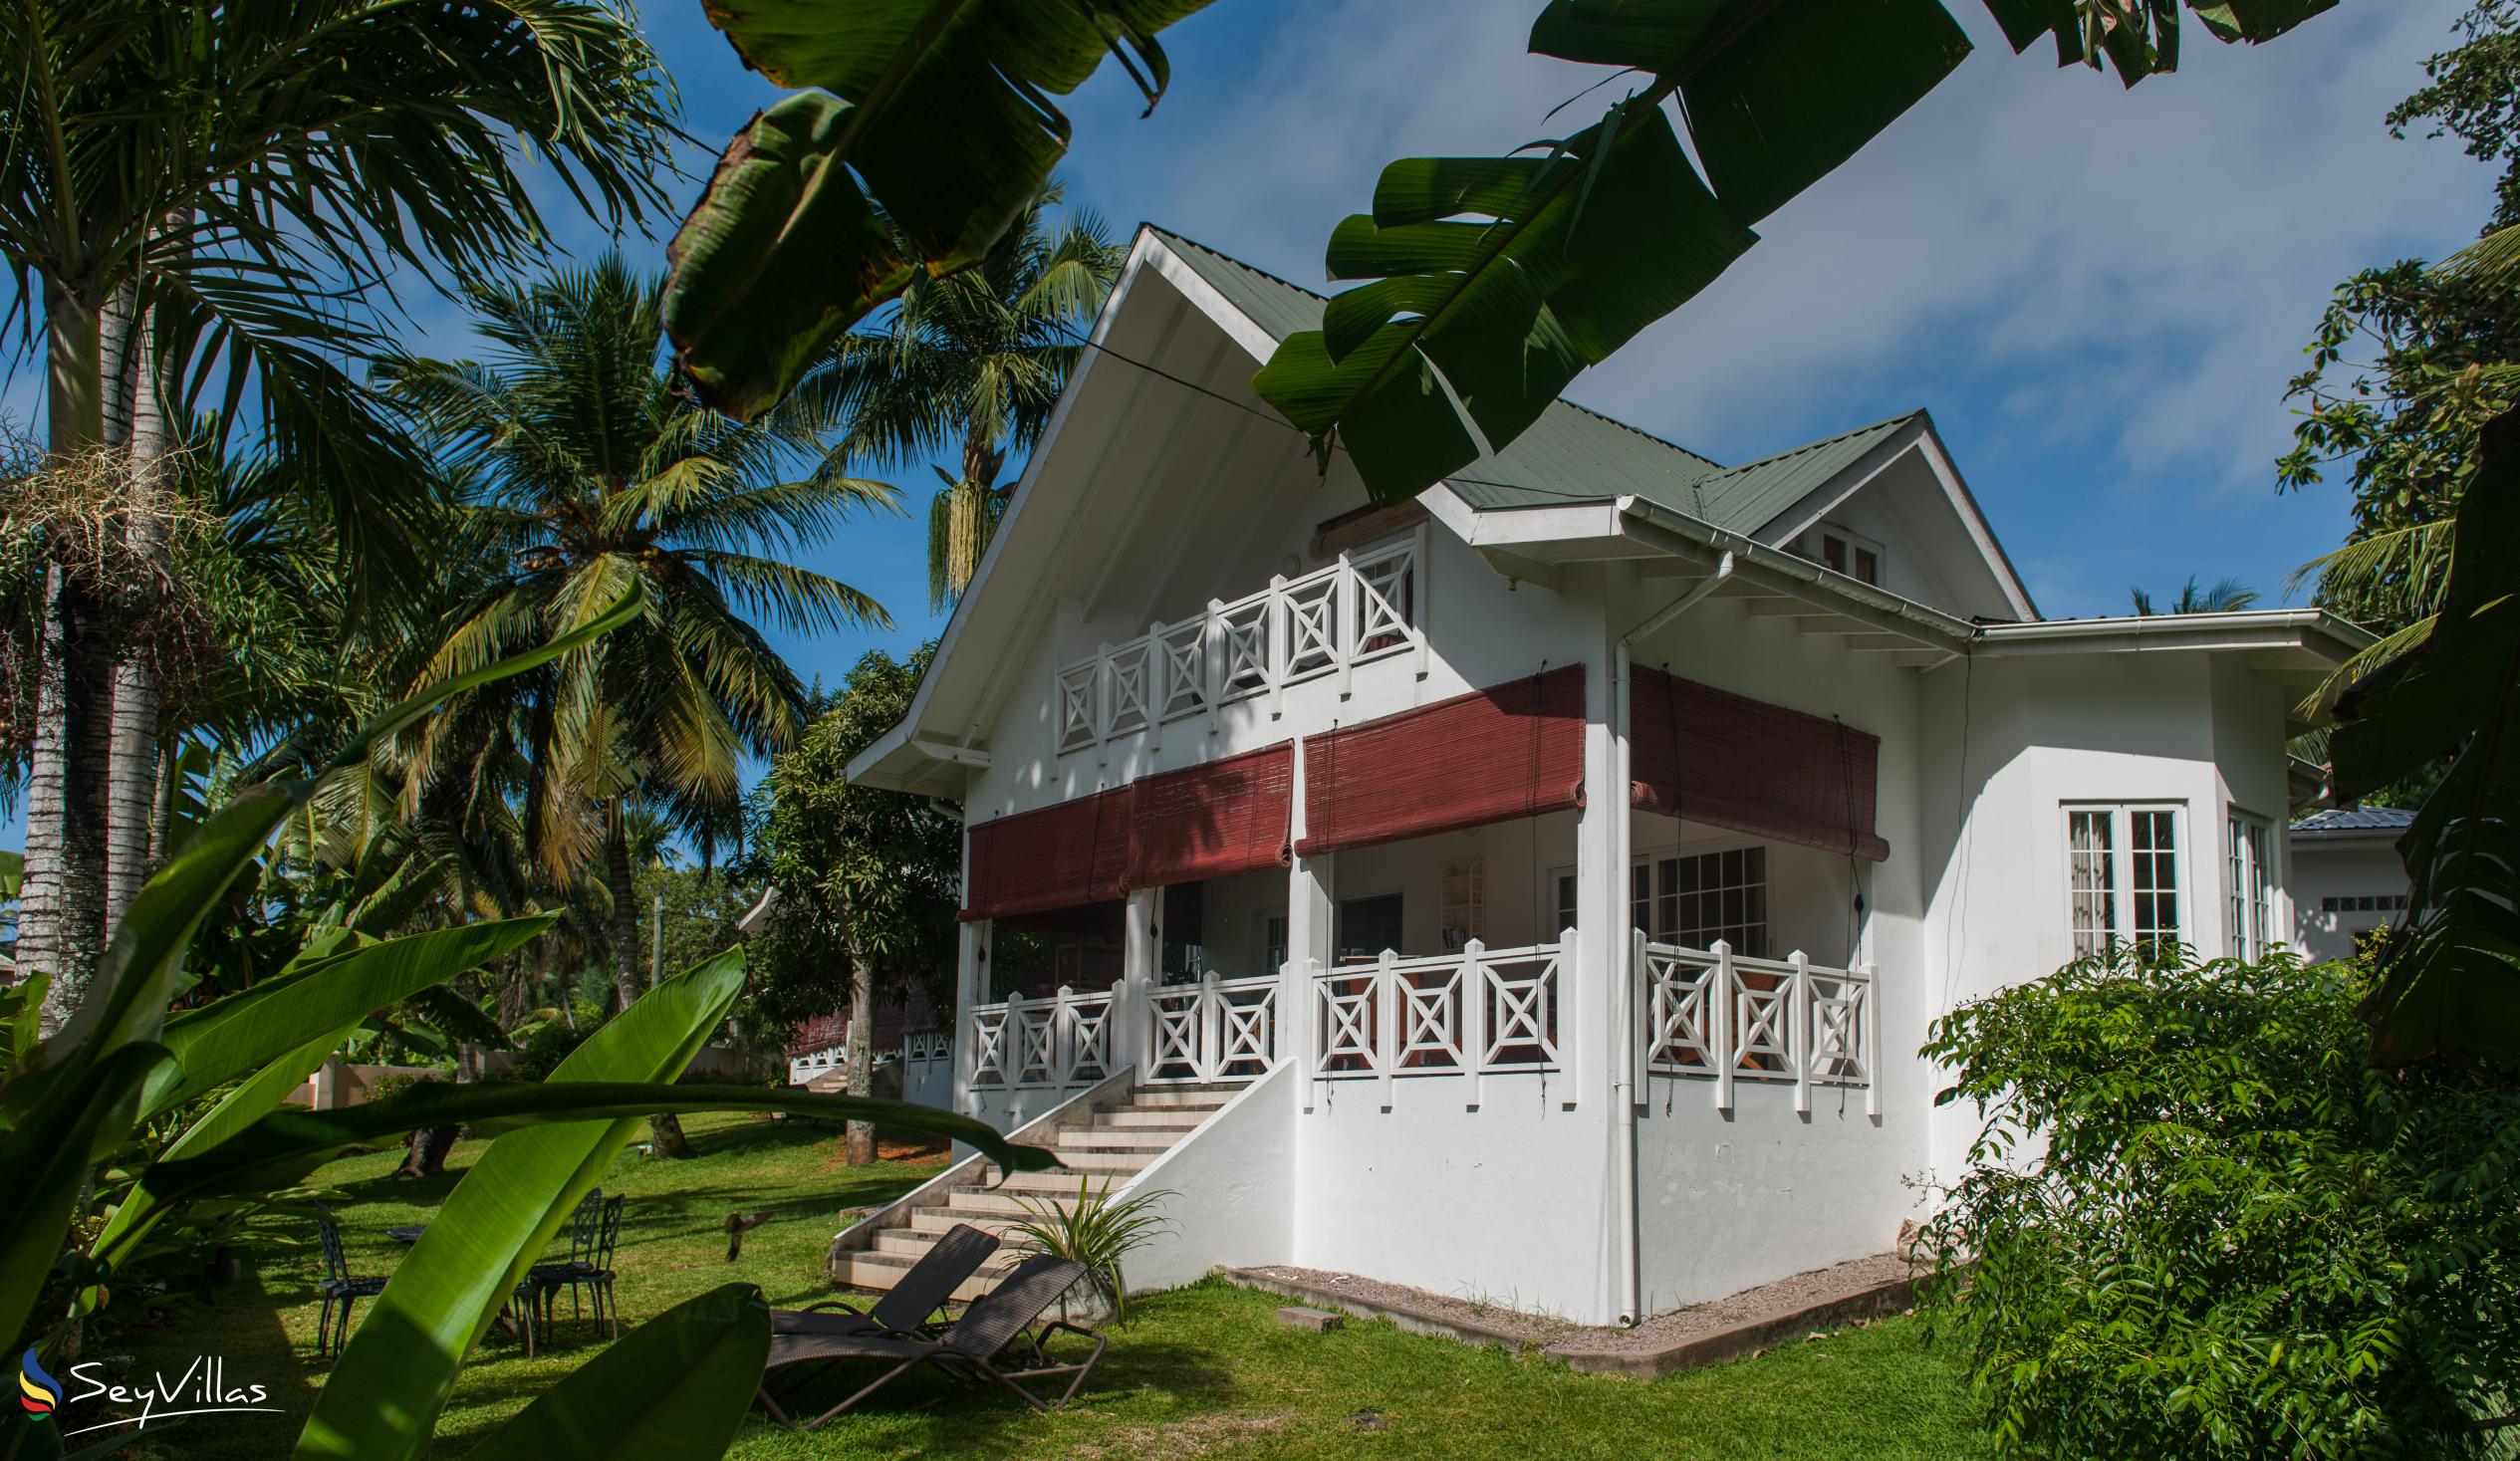 Photo 3: Le Domaine de Bacova - Outdoor area - Mahé (Seychelles)